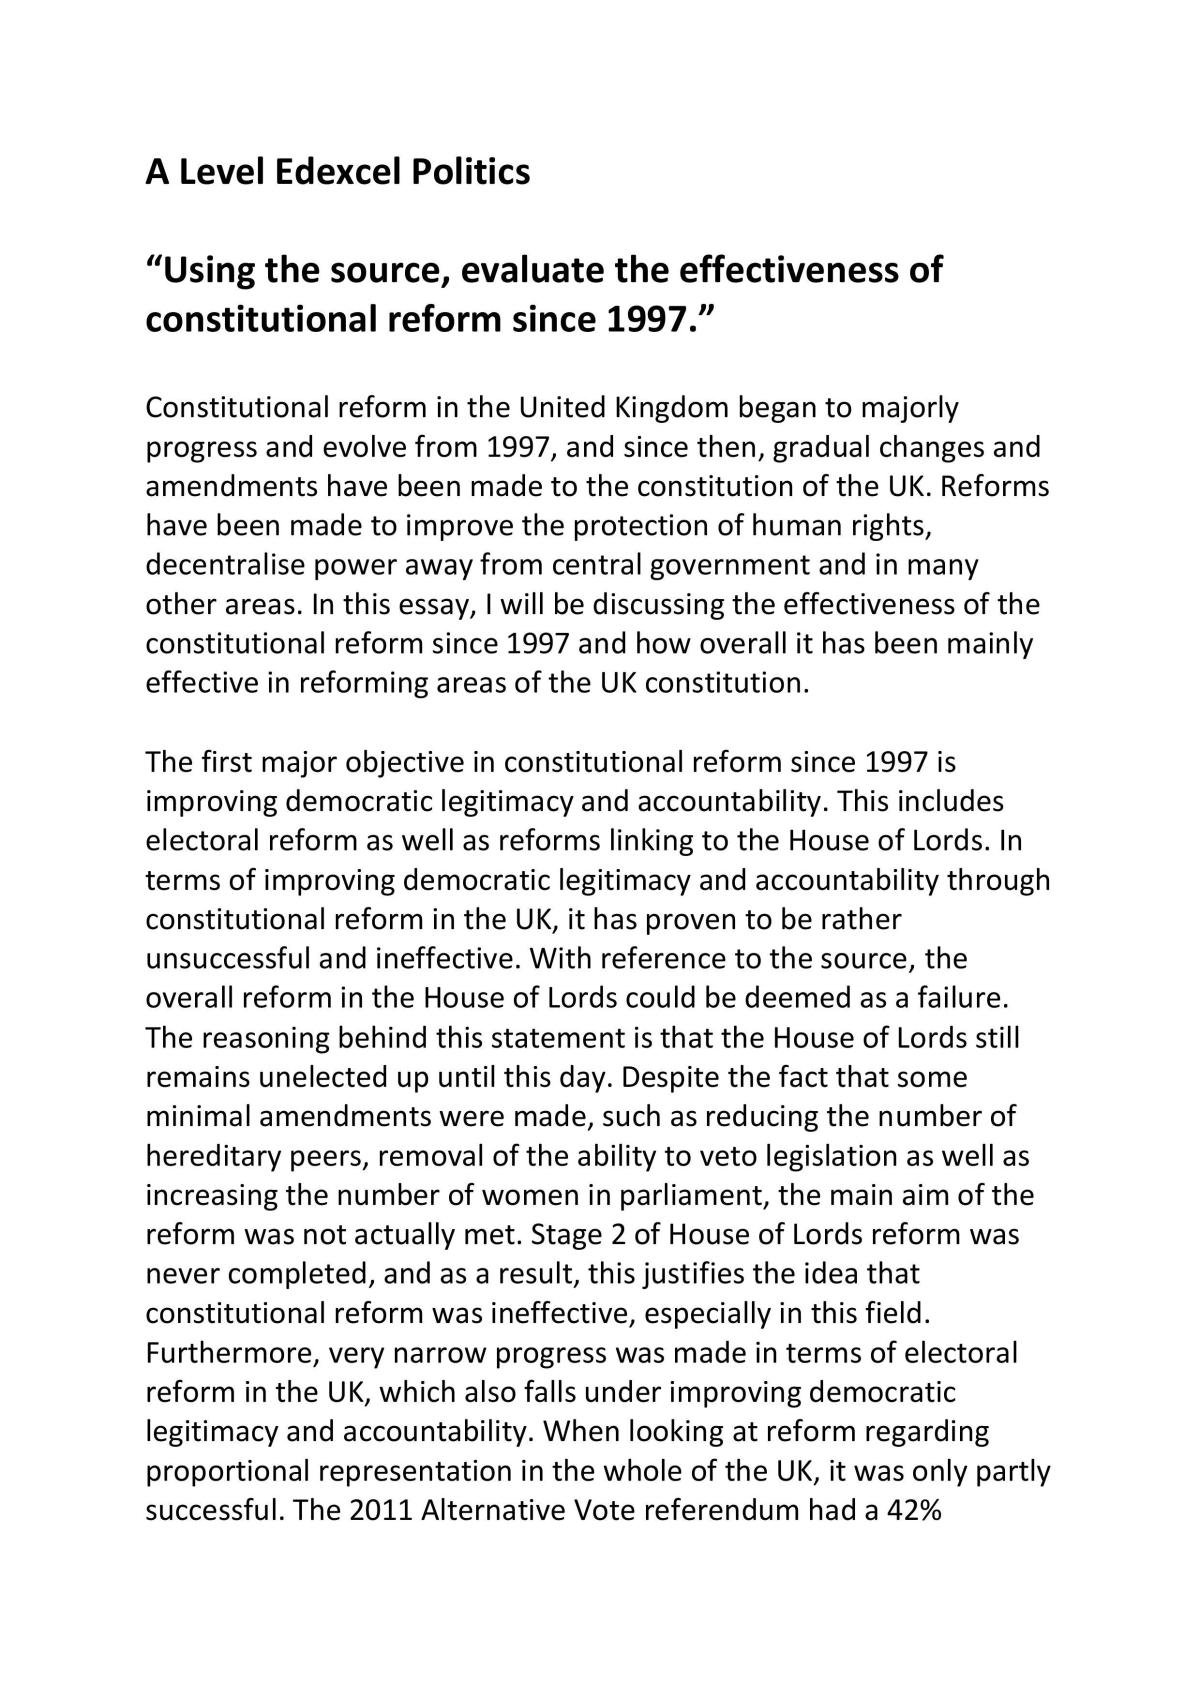 A Level Edexcel Politics UK government constitutional reform essay - Page 1